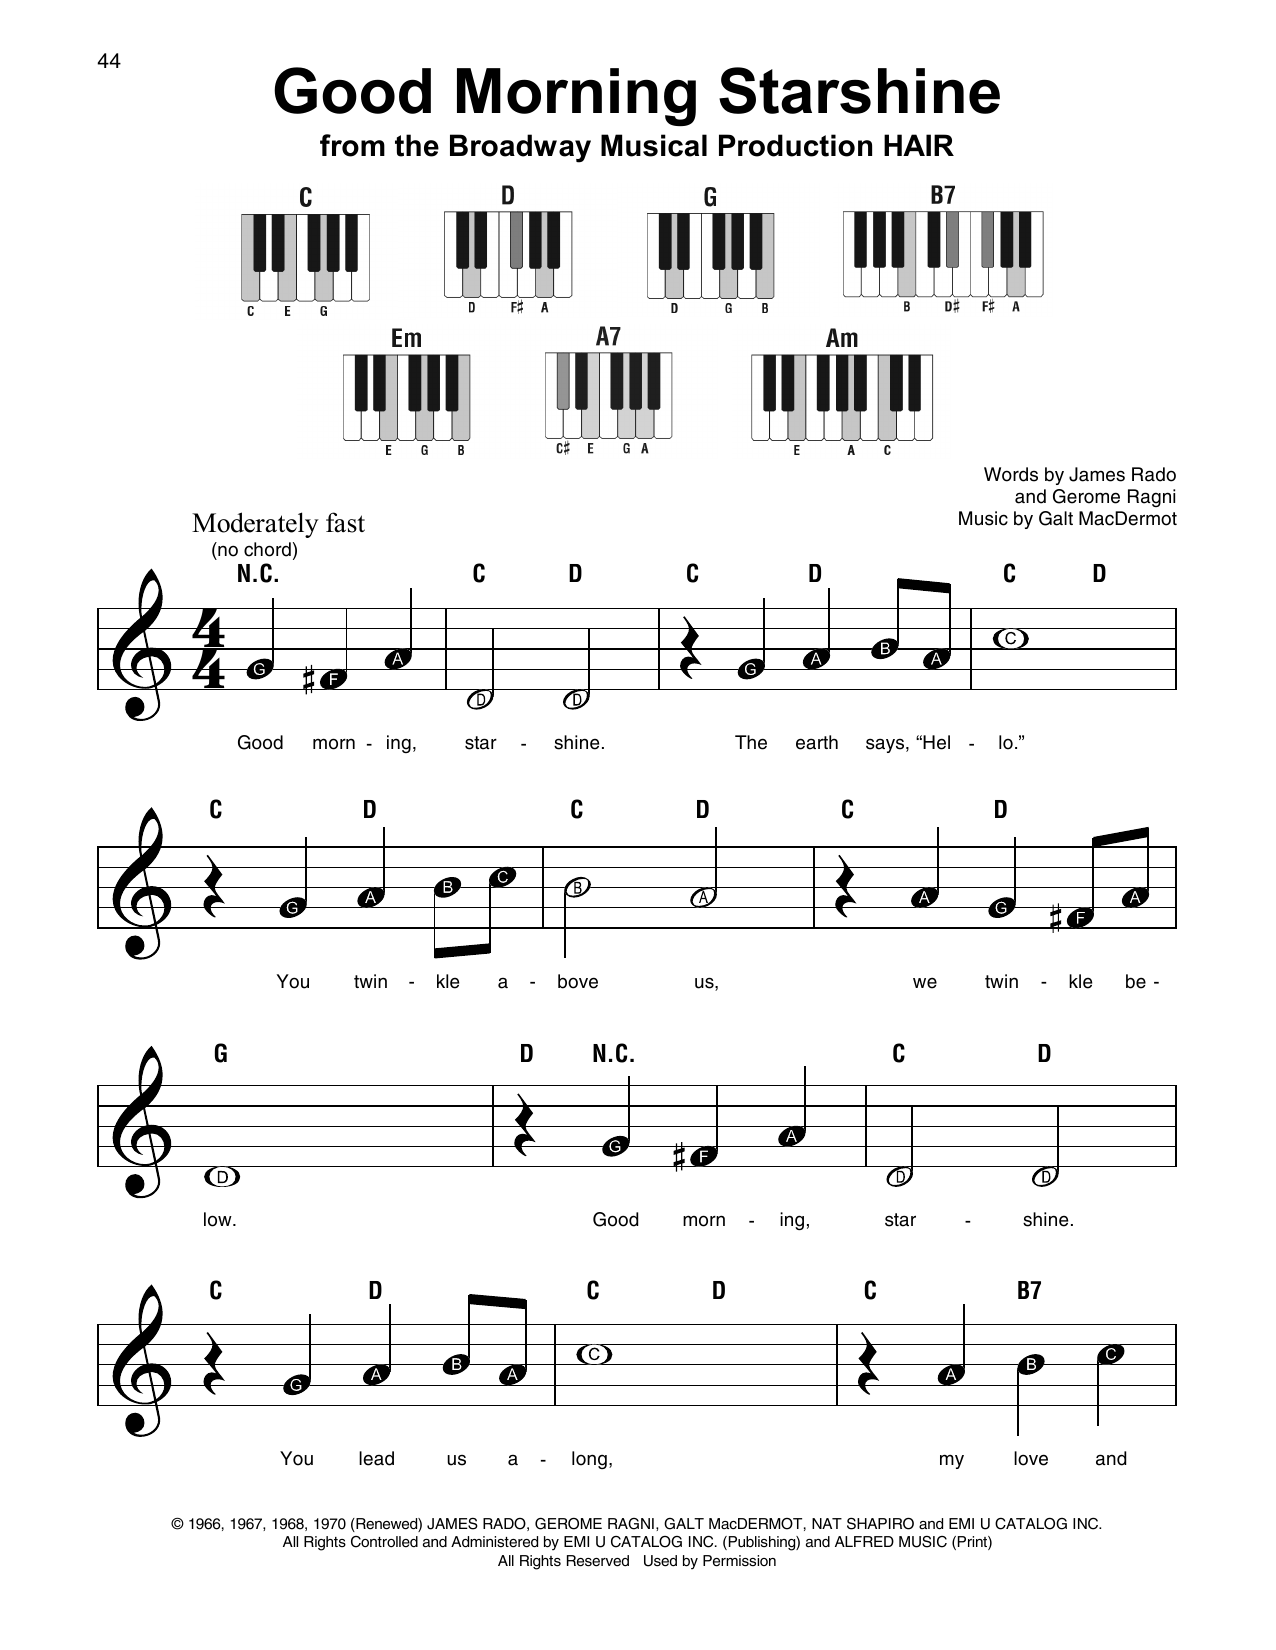 Gerome Ragni Good Morning Starshine Sheet Music Notes & Chords for SPREP - Download or Print PDF